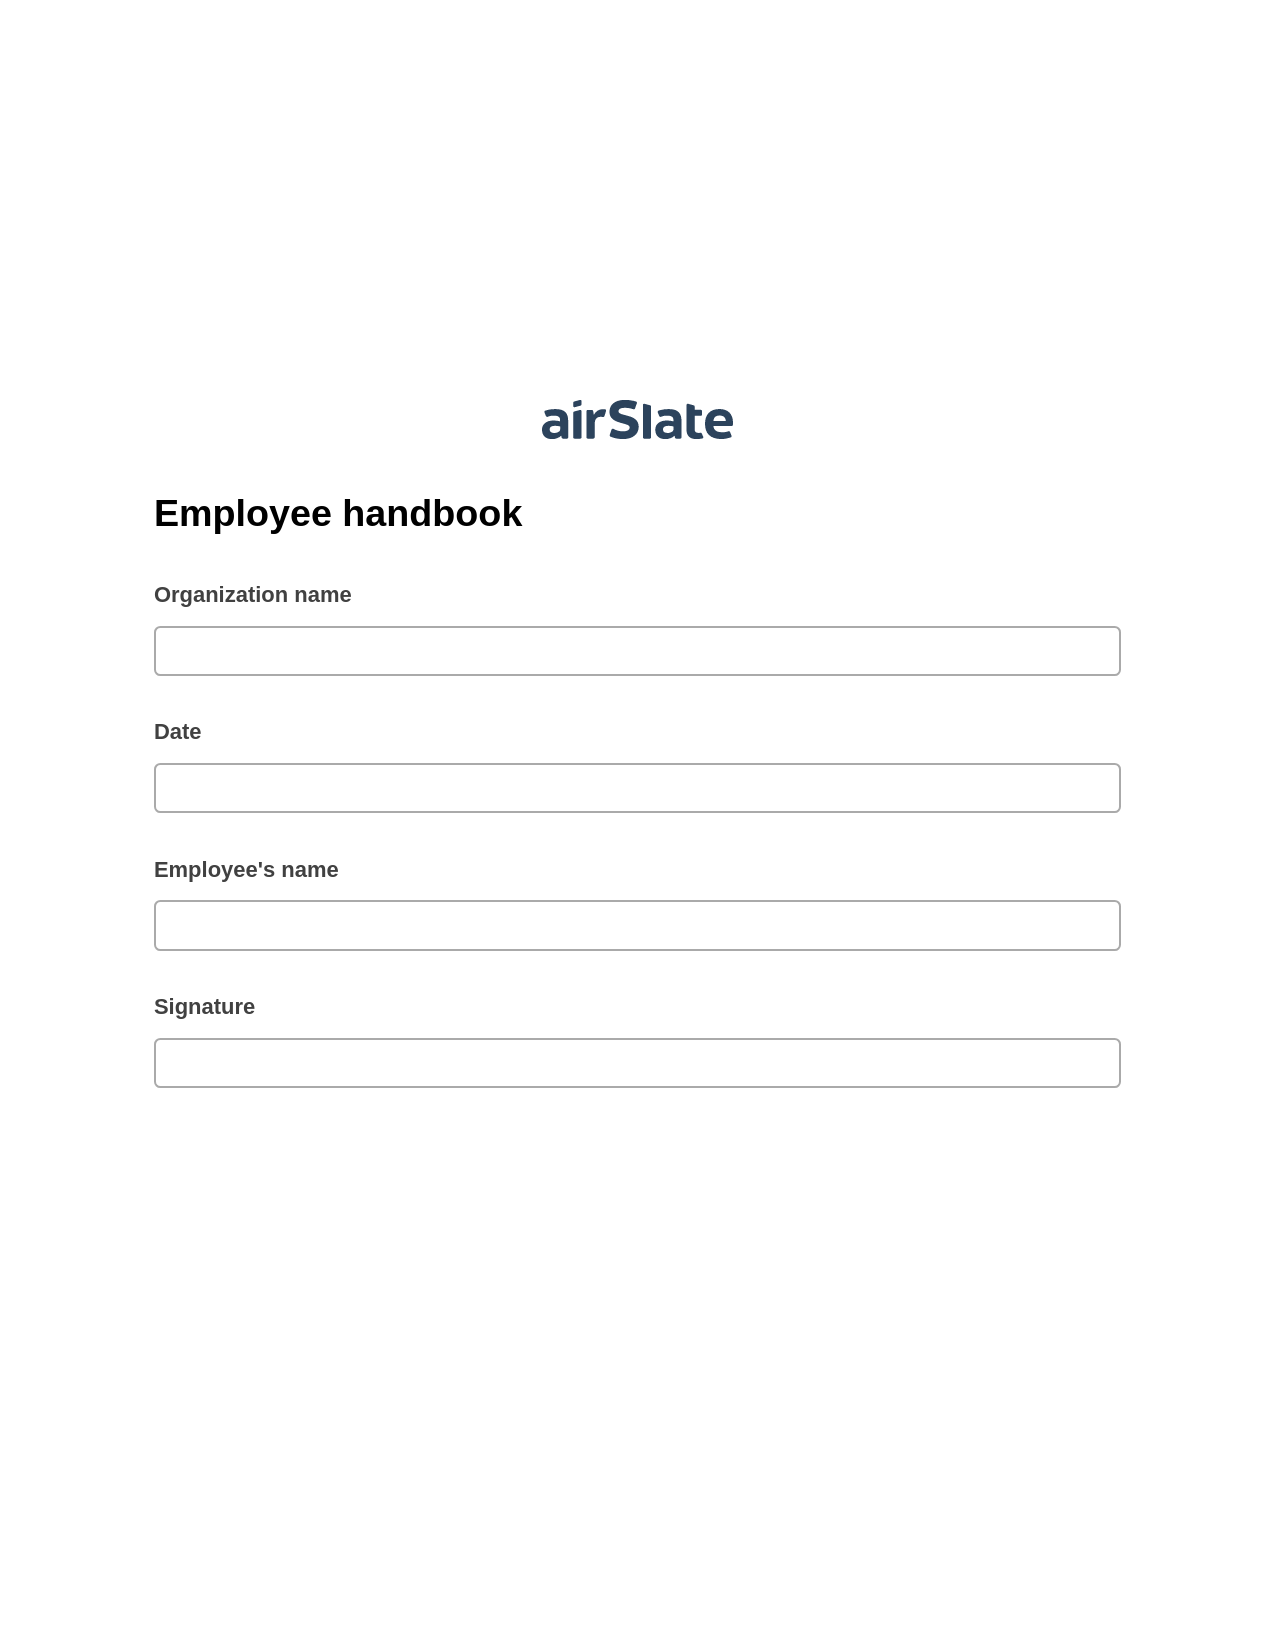 Employee handbook Pre-fill from NetSuite Records Bot, Slack Notification Bot, Slack Two-Way Binding Bot